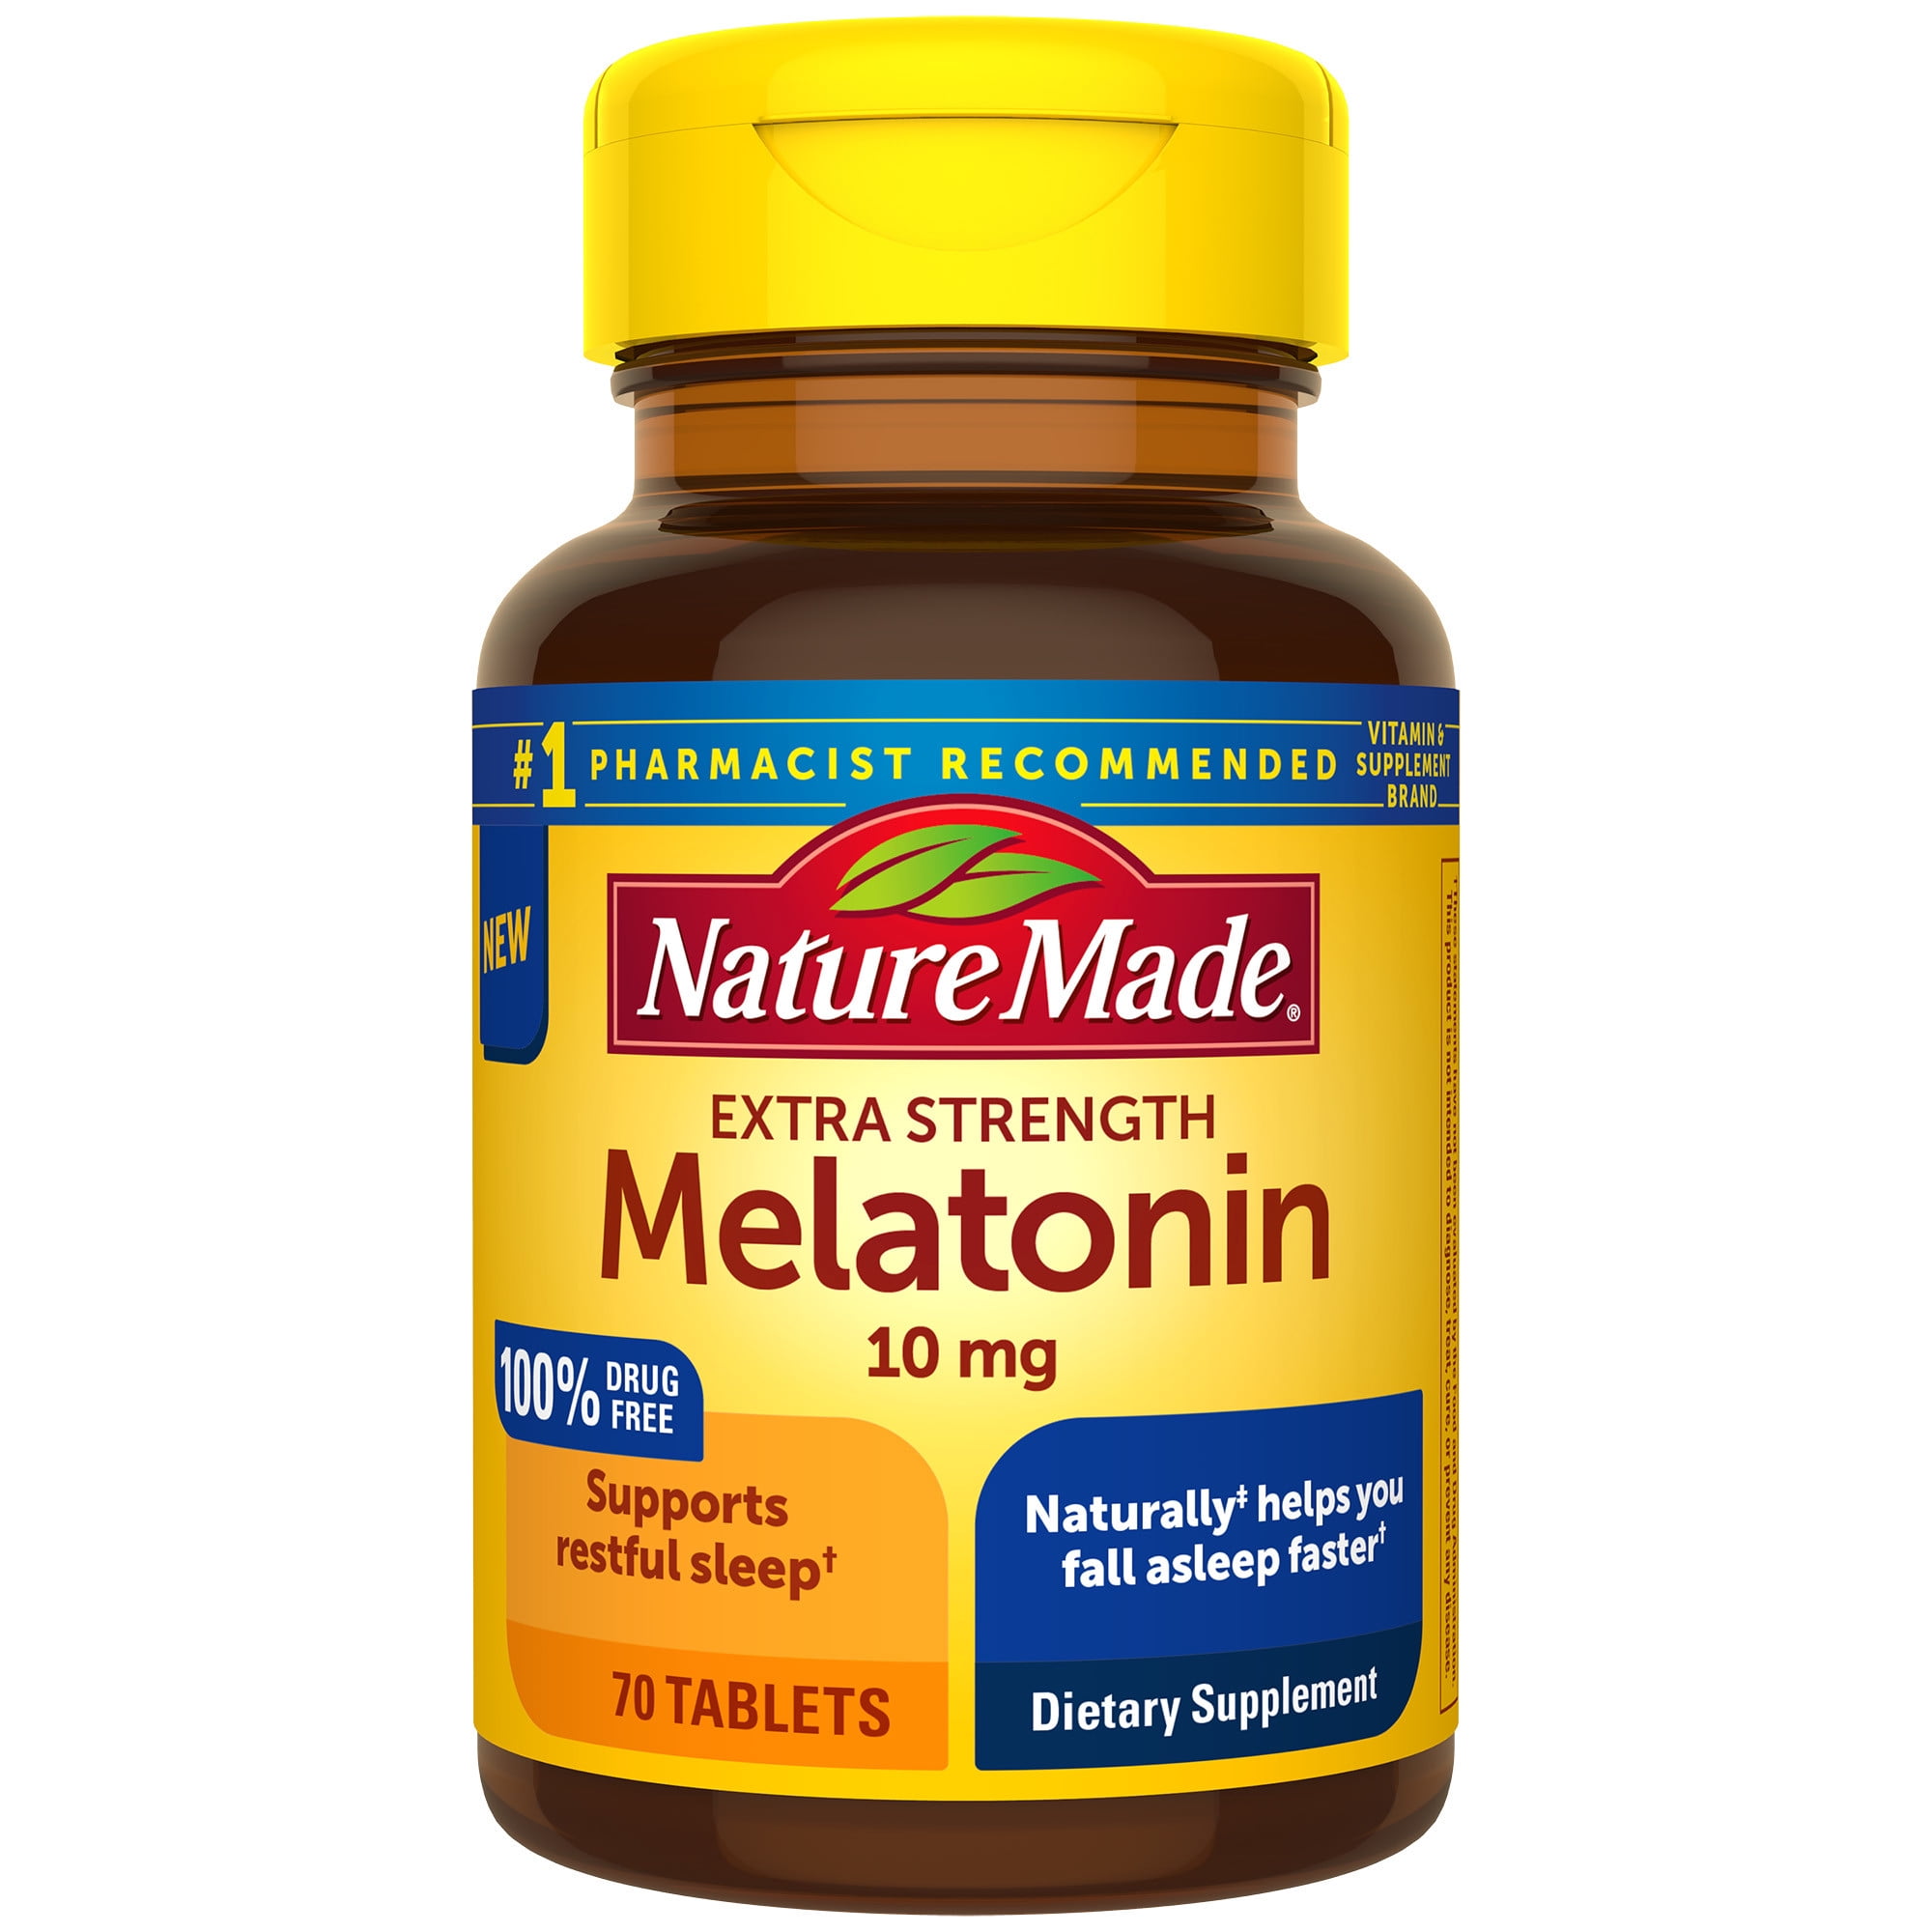 nature-made-extra-strength-melatonin-10-mg-tablets-70-count-sleep-aid-supplement-walmart